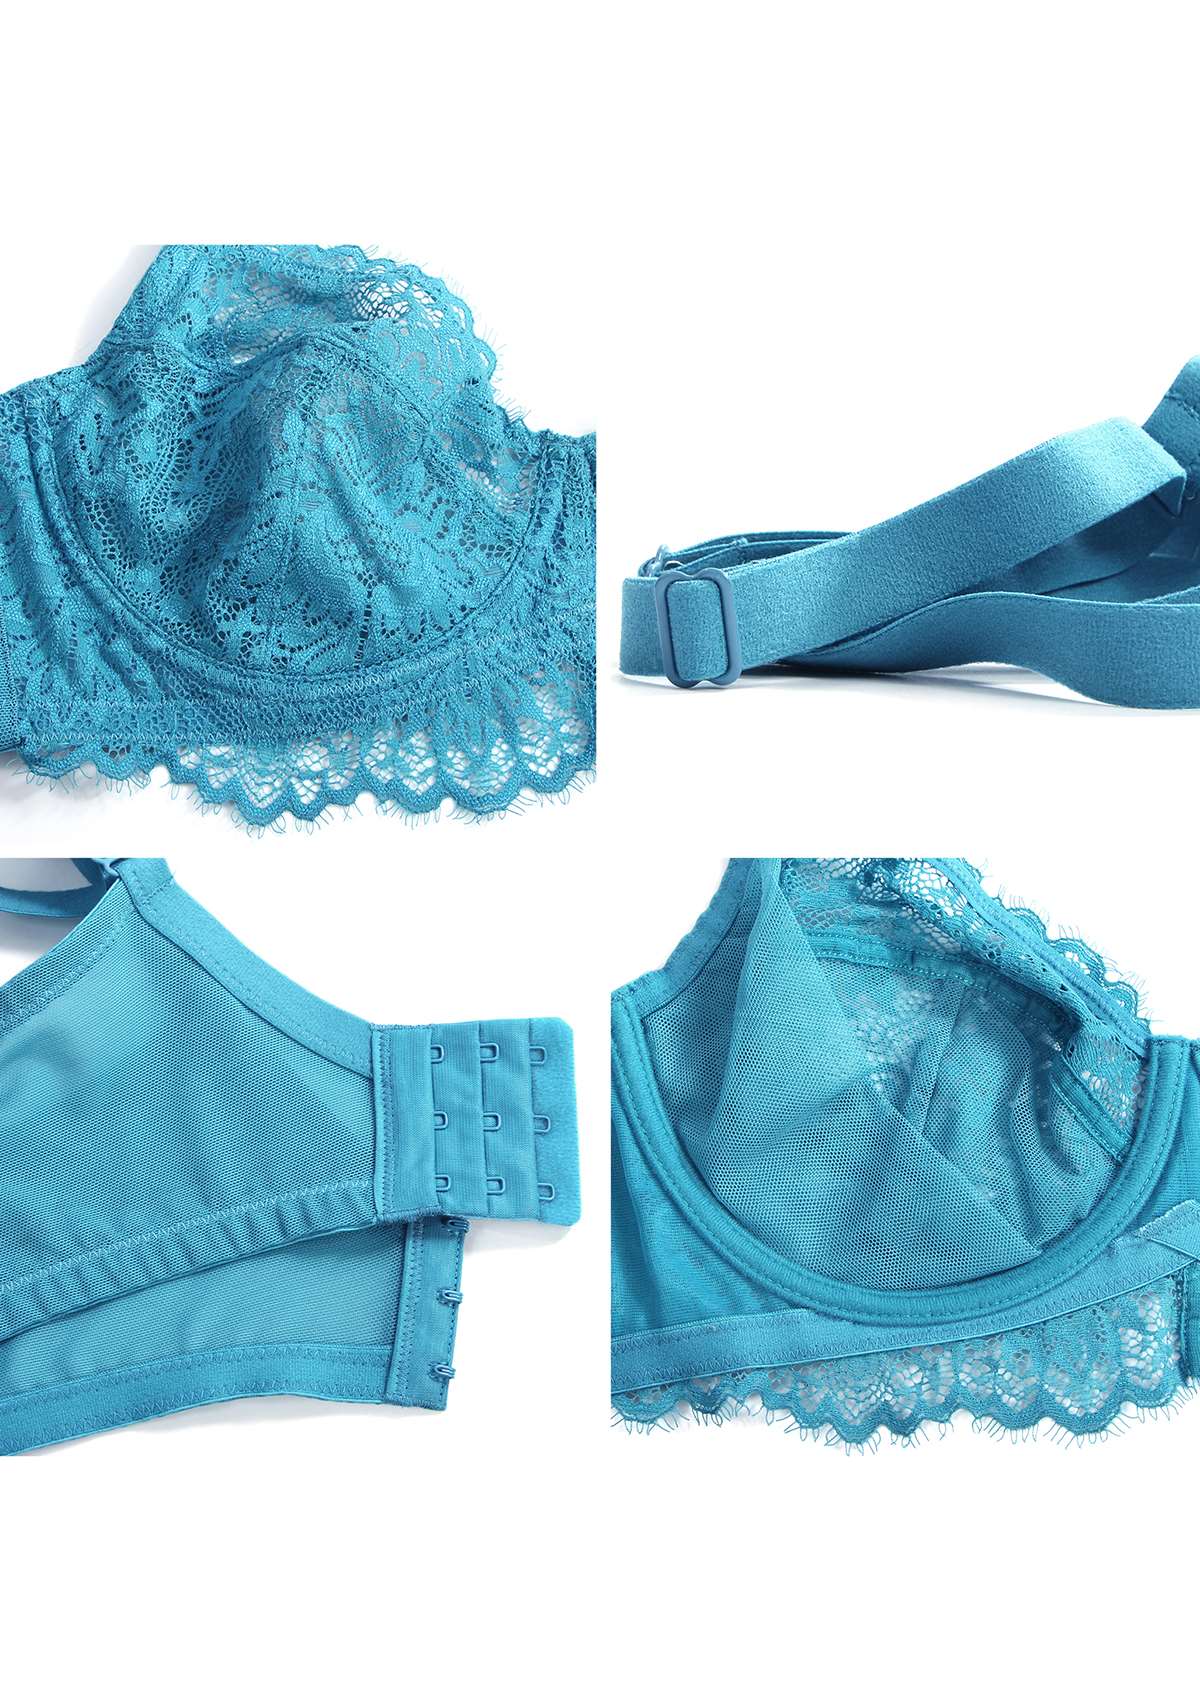 HSIA Sunflower Lace Bra And Panty: Cute Plus Size Comfort Bra - Horizon Blue / 34 / H